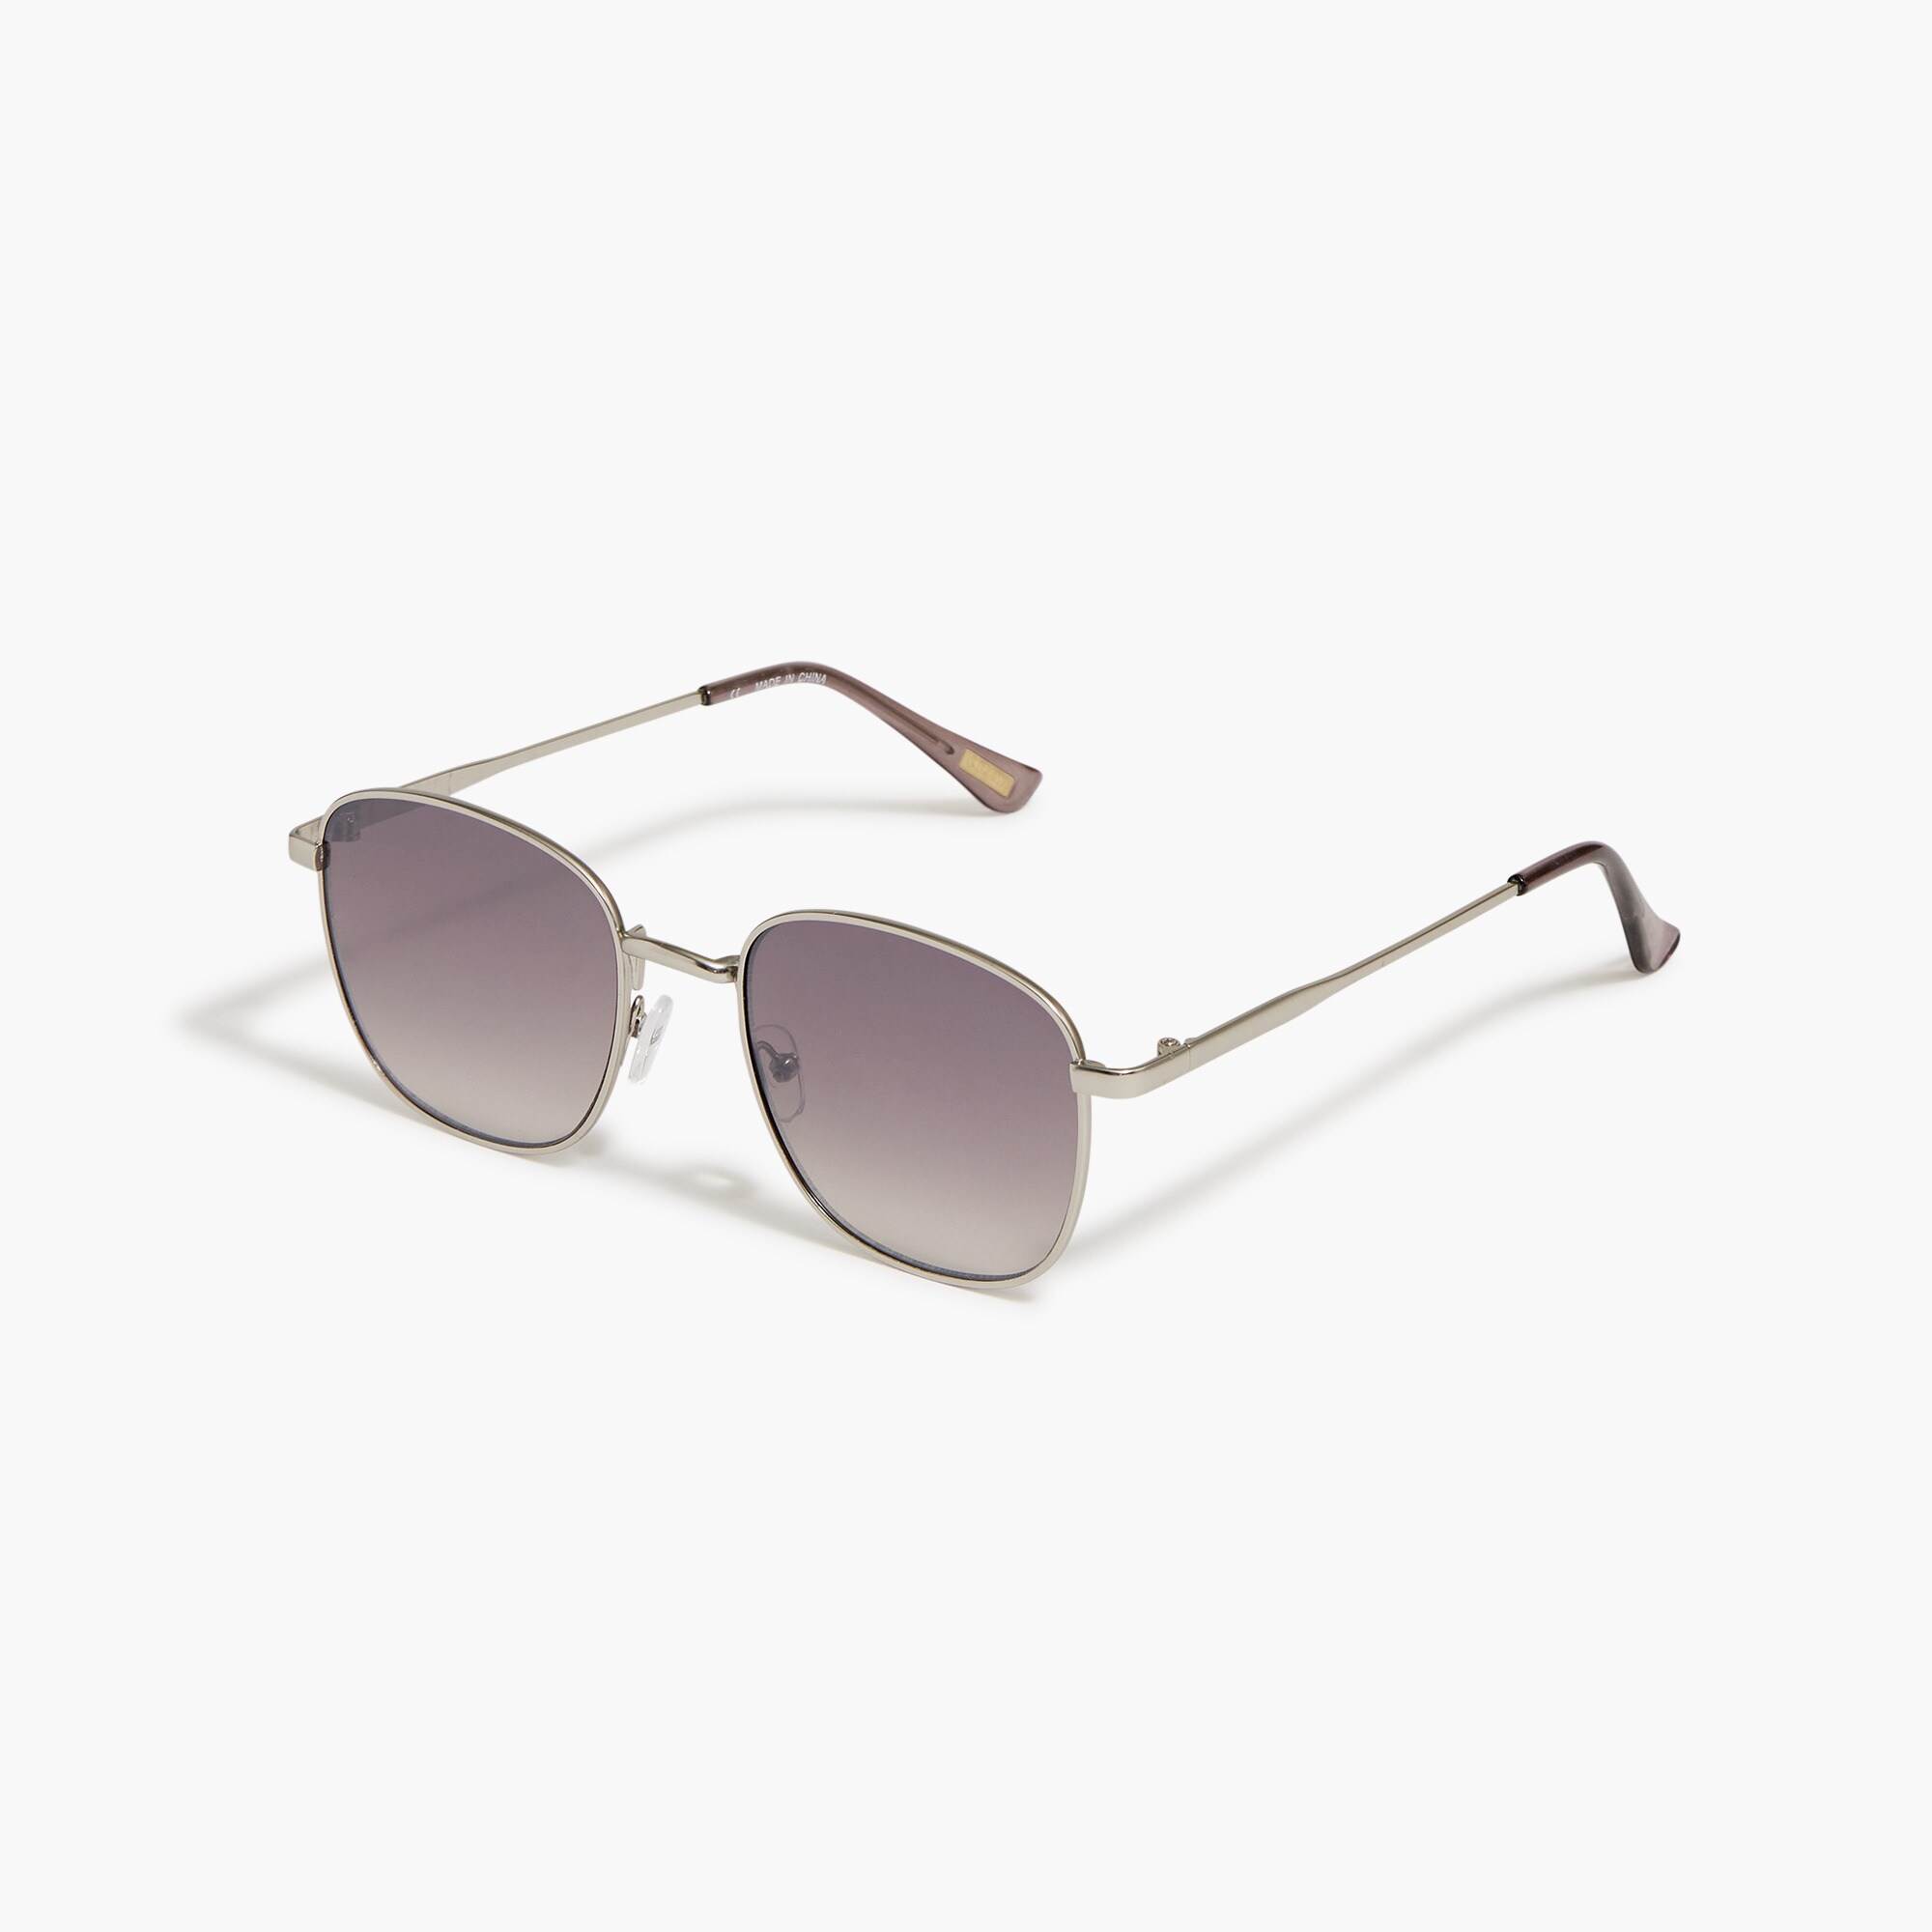 womens Round-frame sunglasses